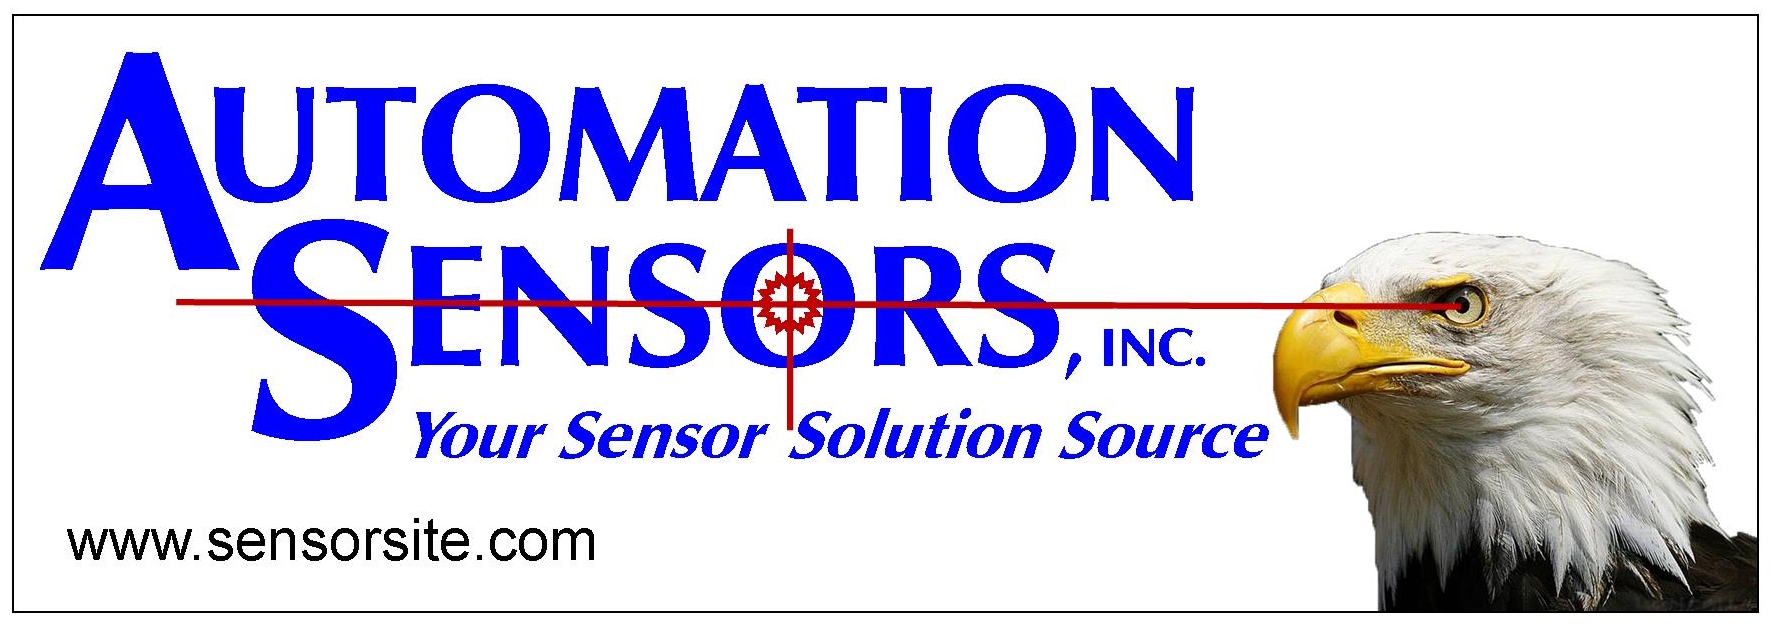 Automation Sensors, Inc